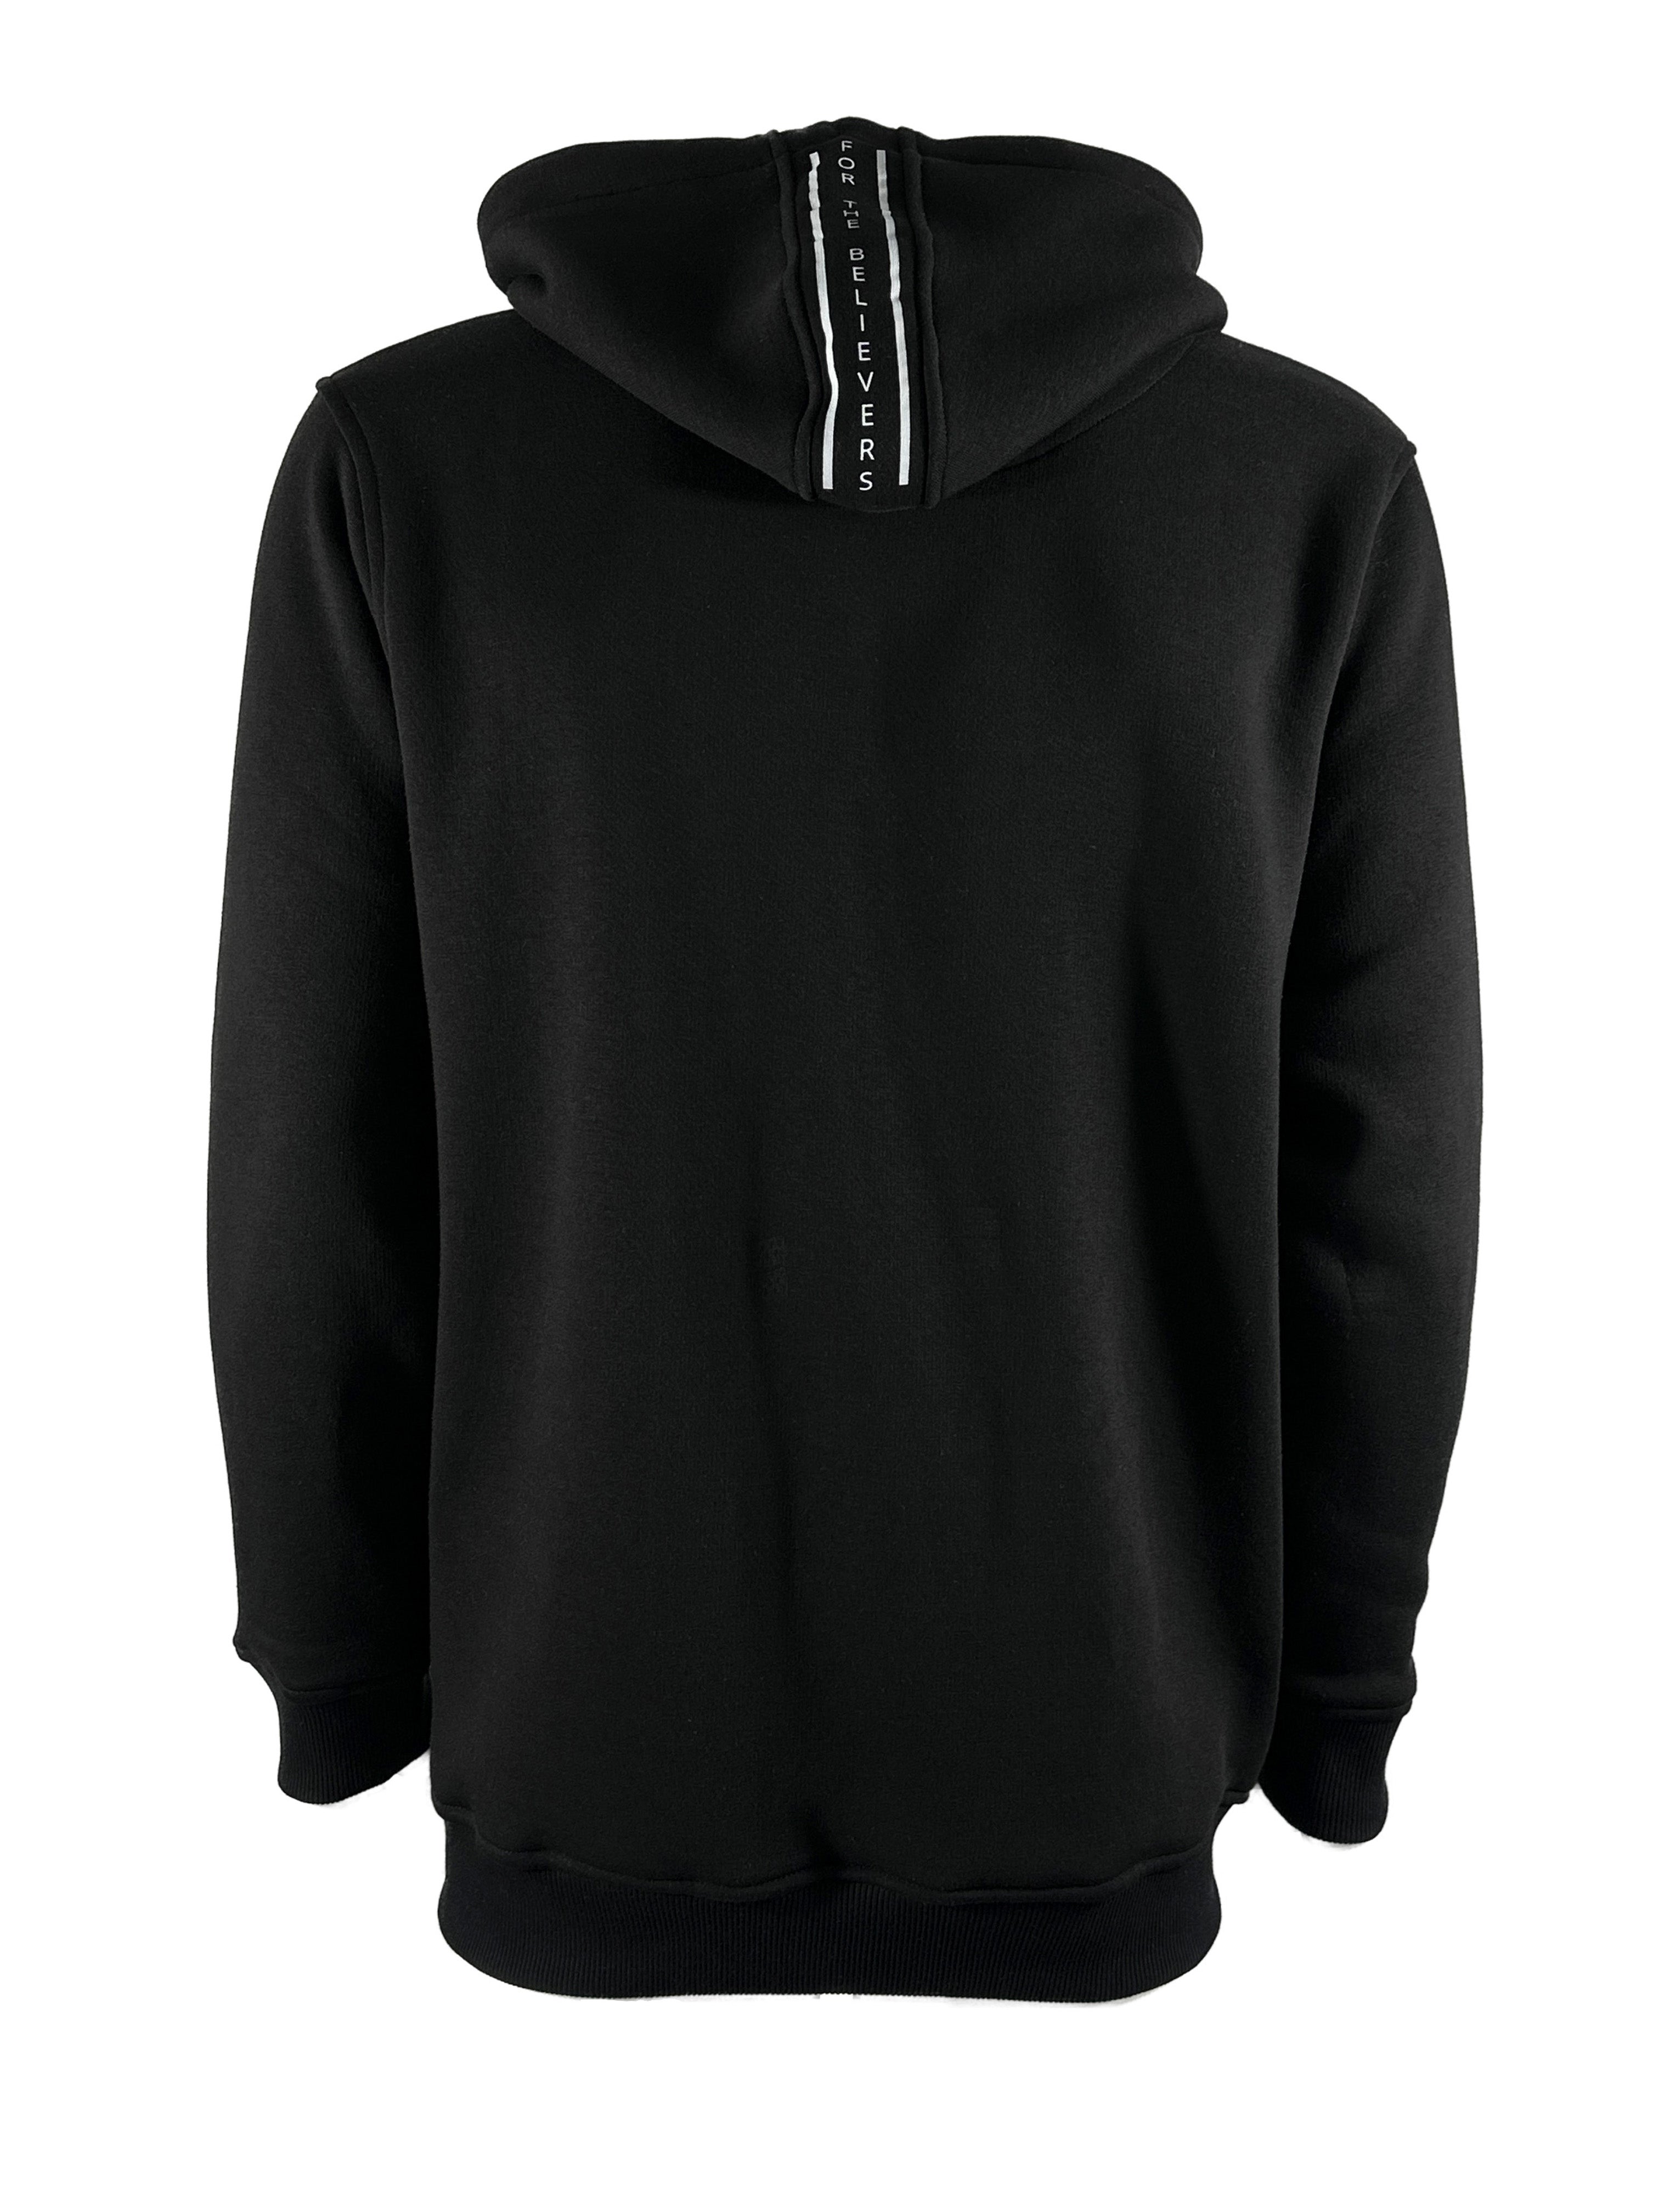 Dubai black zipped hoodie - One fourteen apparel